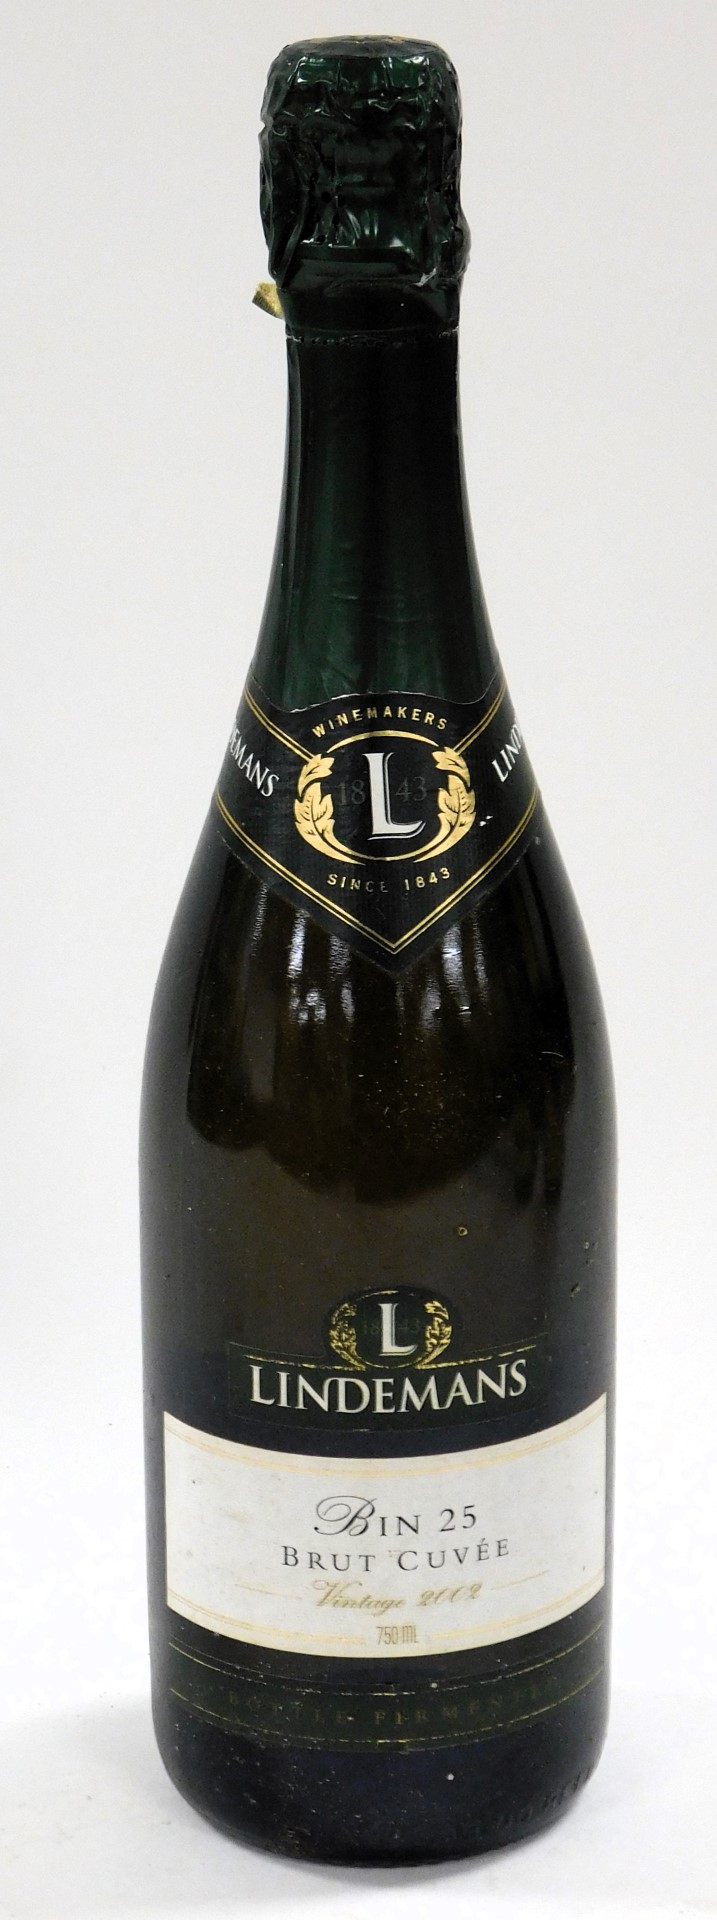 A bottle of GH Martel and Company champagne, blanc de blancs Reminger demi-sec, Lindemans brut cuvee - Image 4 of 4